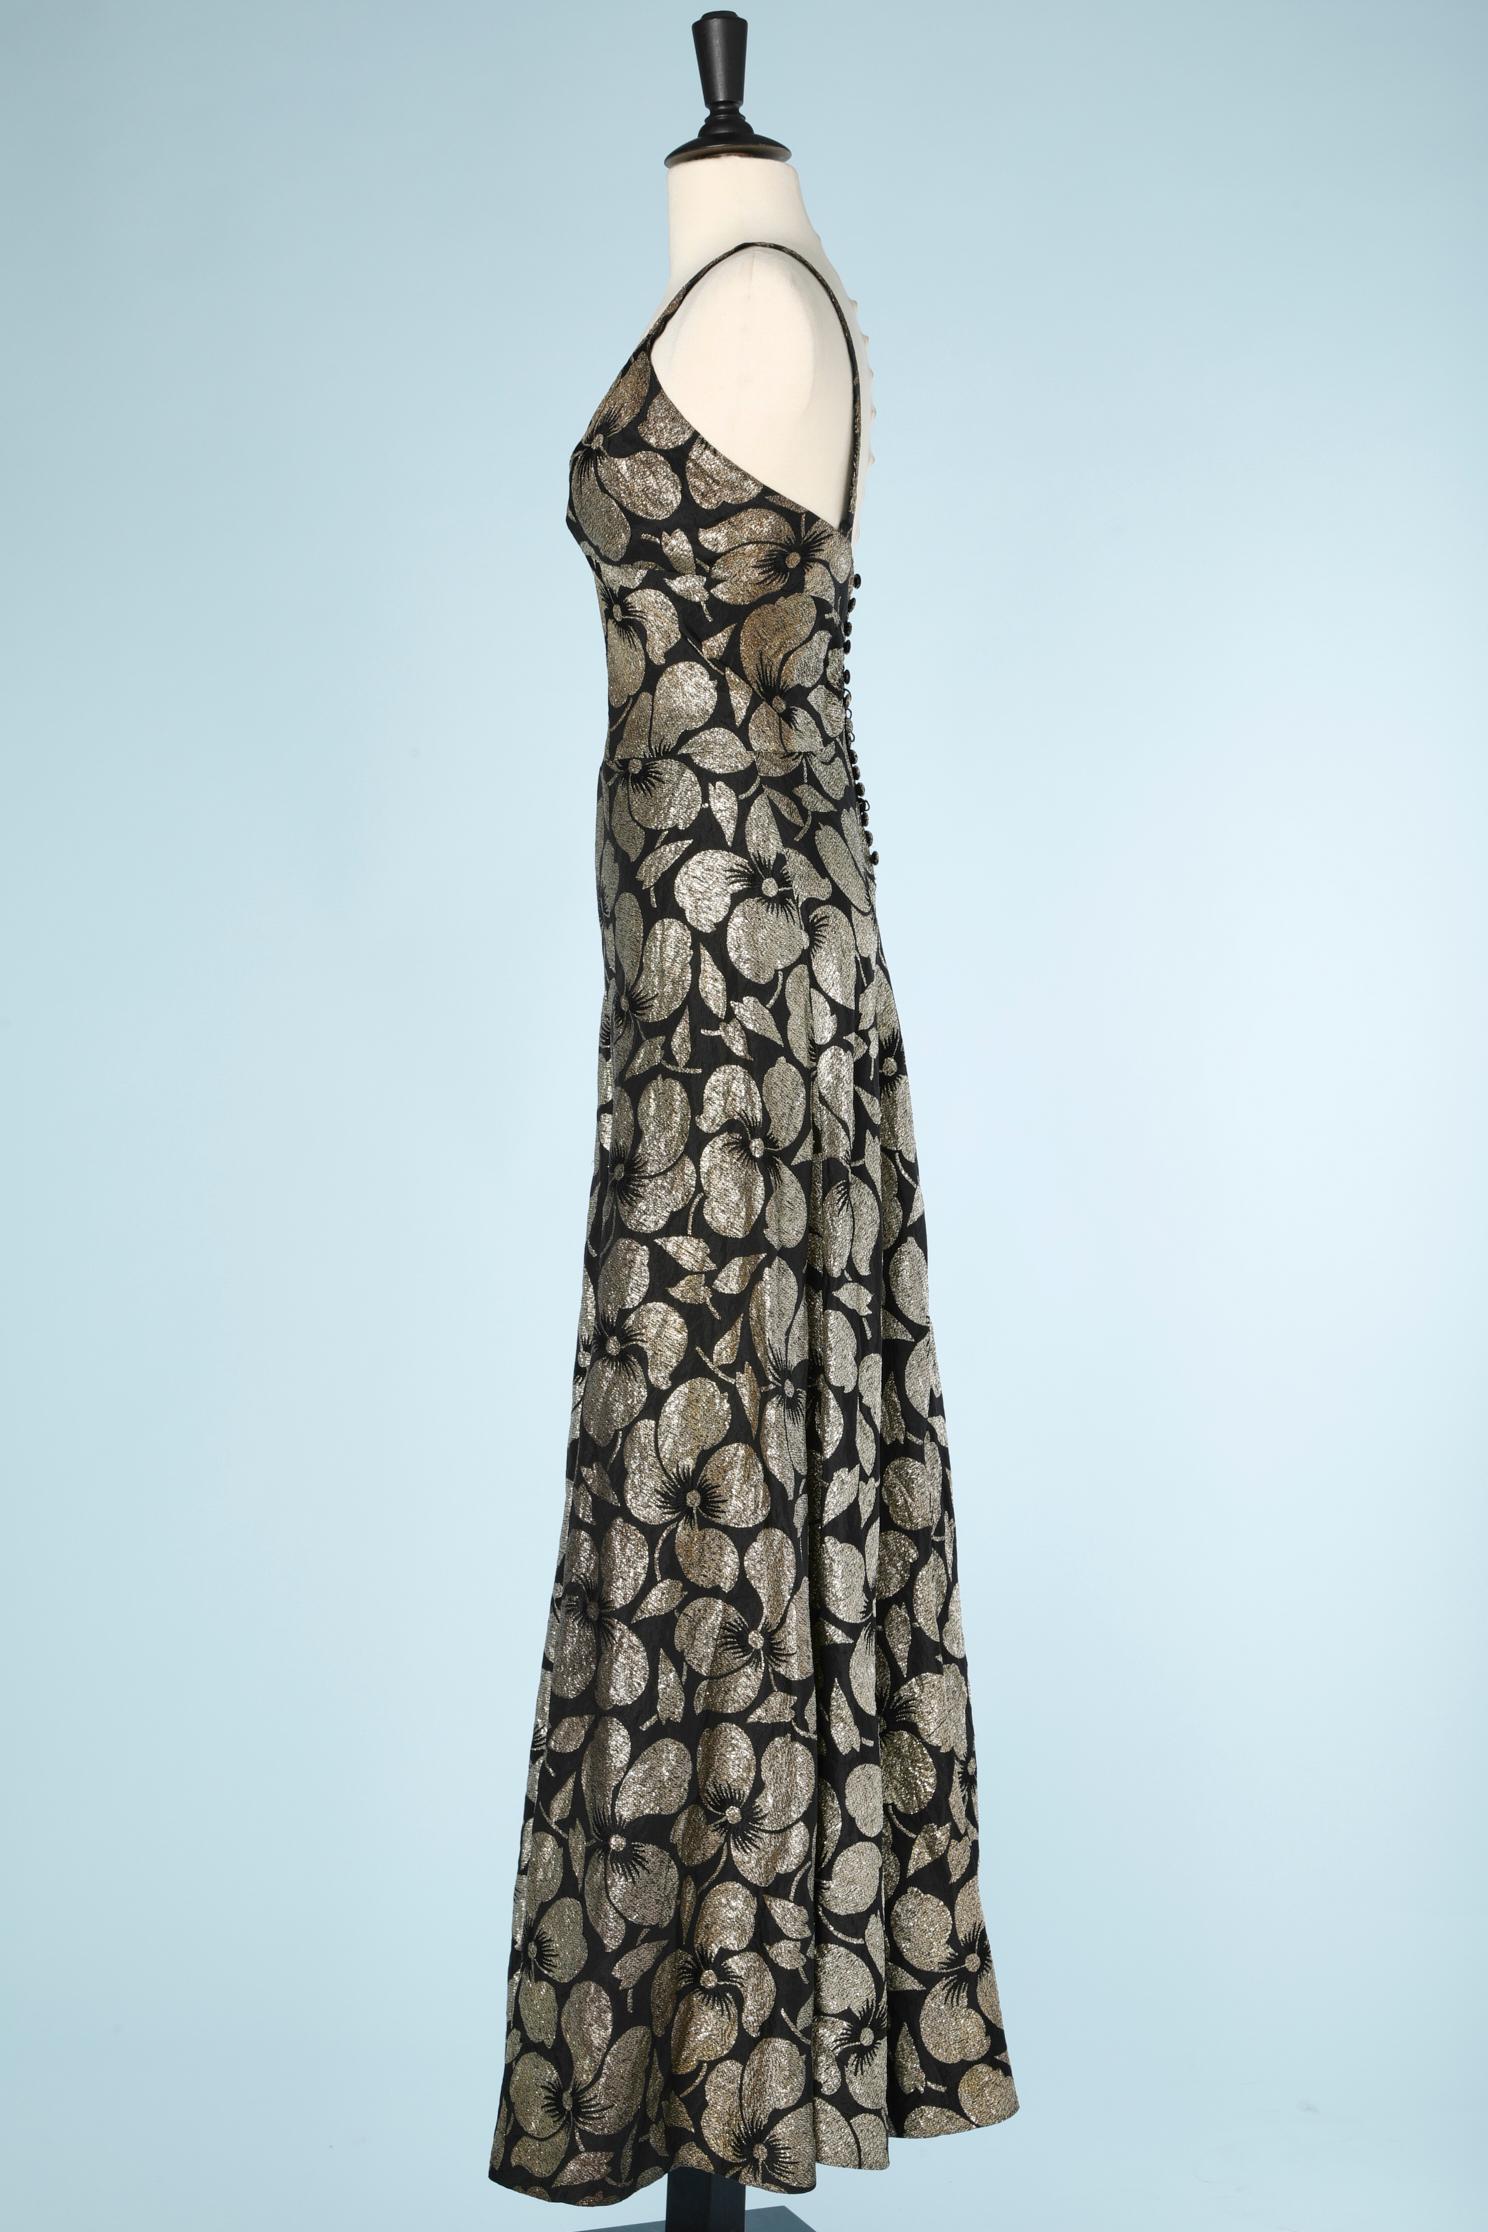 Evening long skirt-suit in black velvet and gold lurex brocade dress For Sale 4